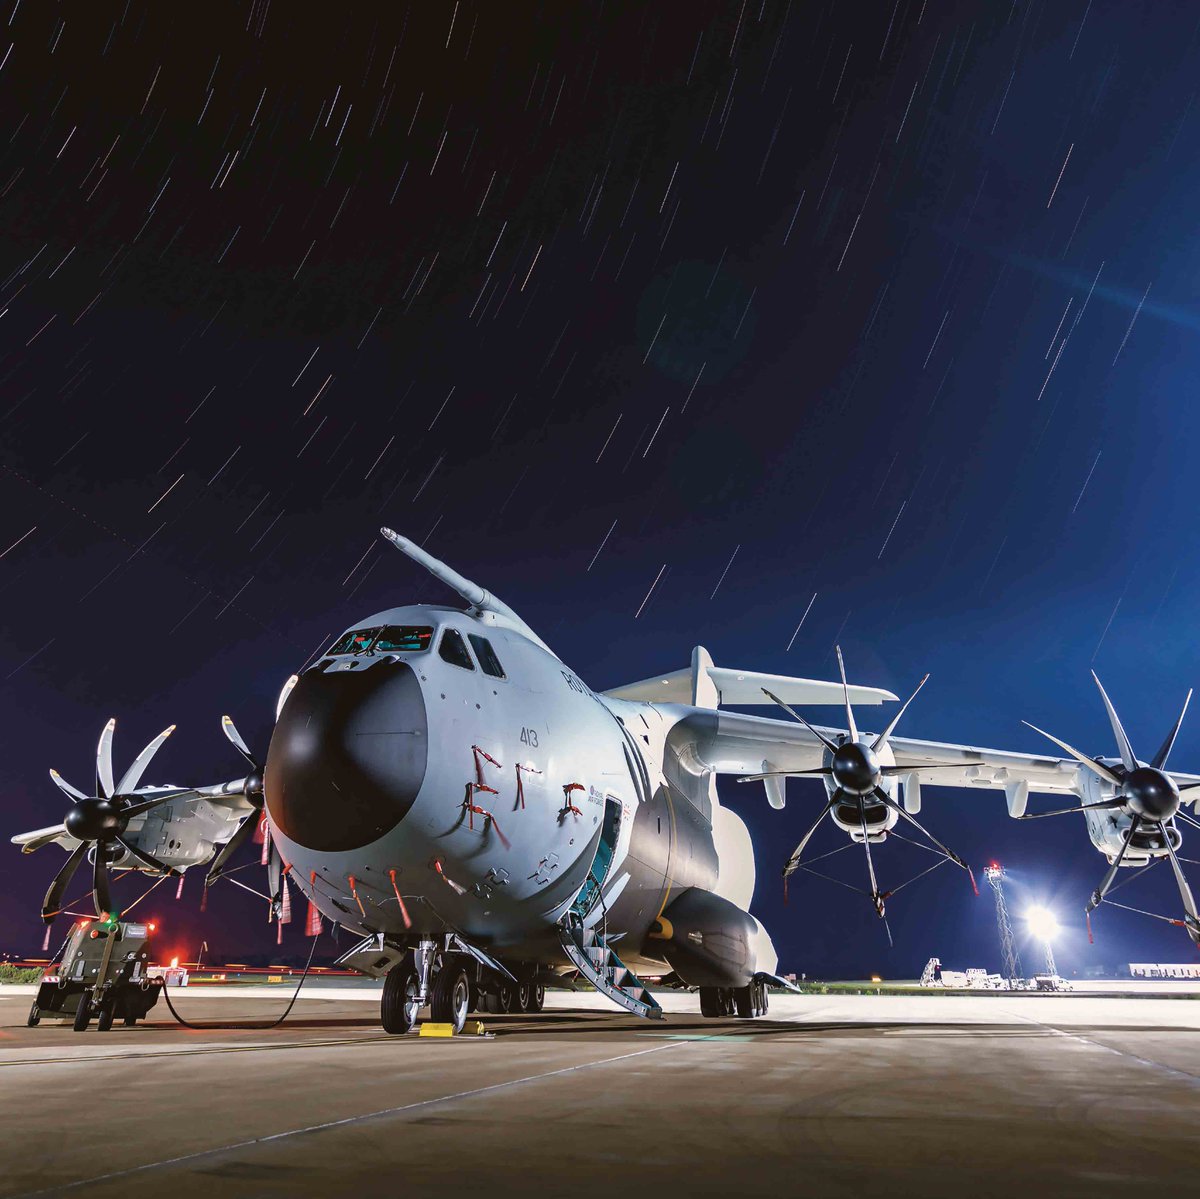 12 Days of @RAF images for Christmas - Day 6! A Royal Air Force Atlas C1 (A400M) transport aircraft at RAF Akrotiri
#RAFCalendars  #12DaysOfRAF #ChristmasCountdown